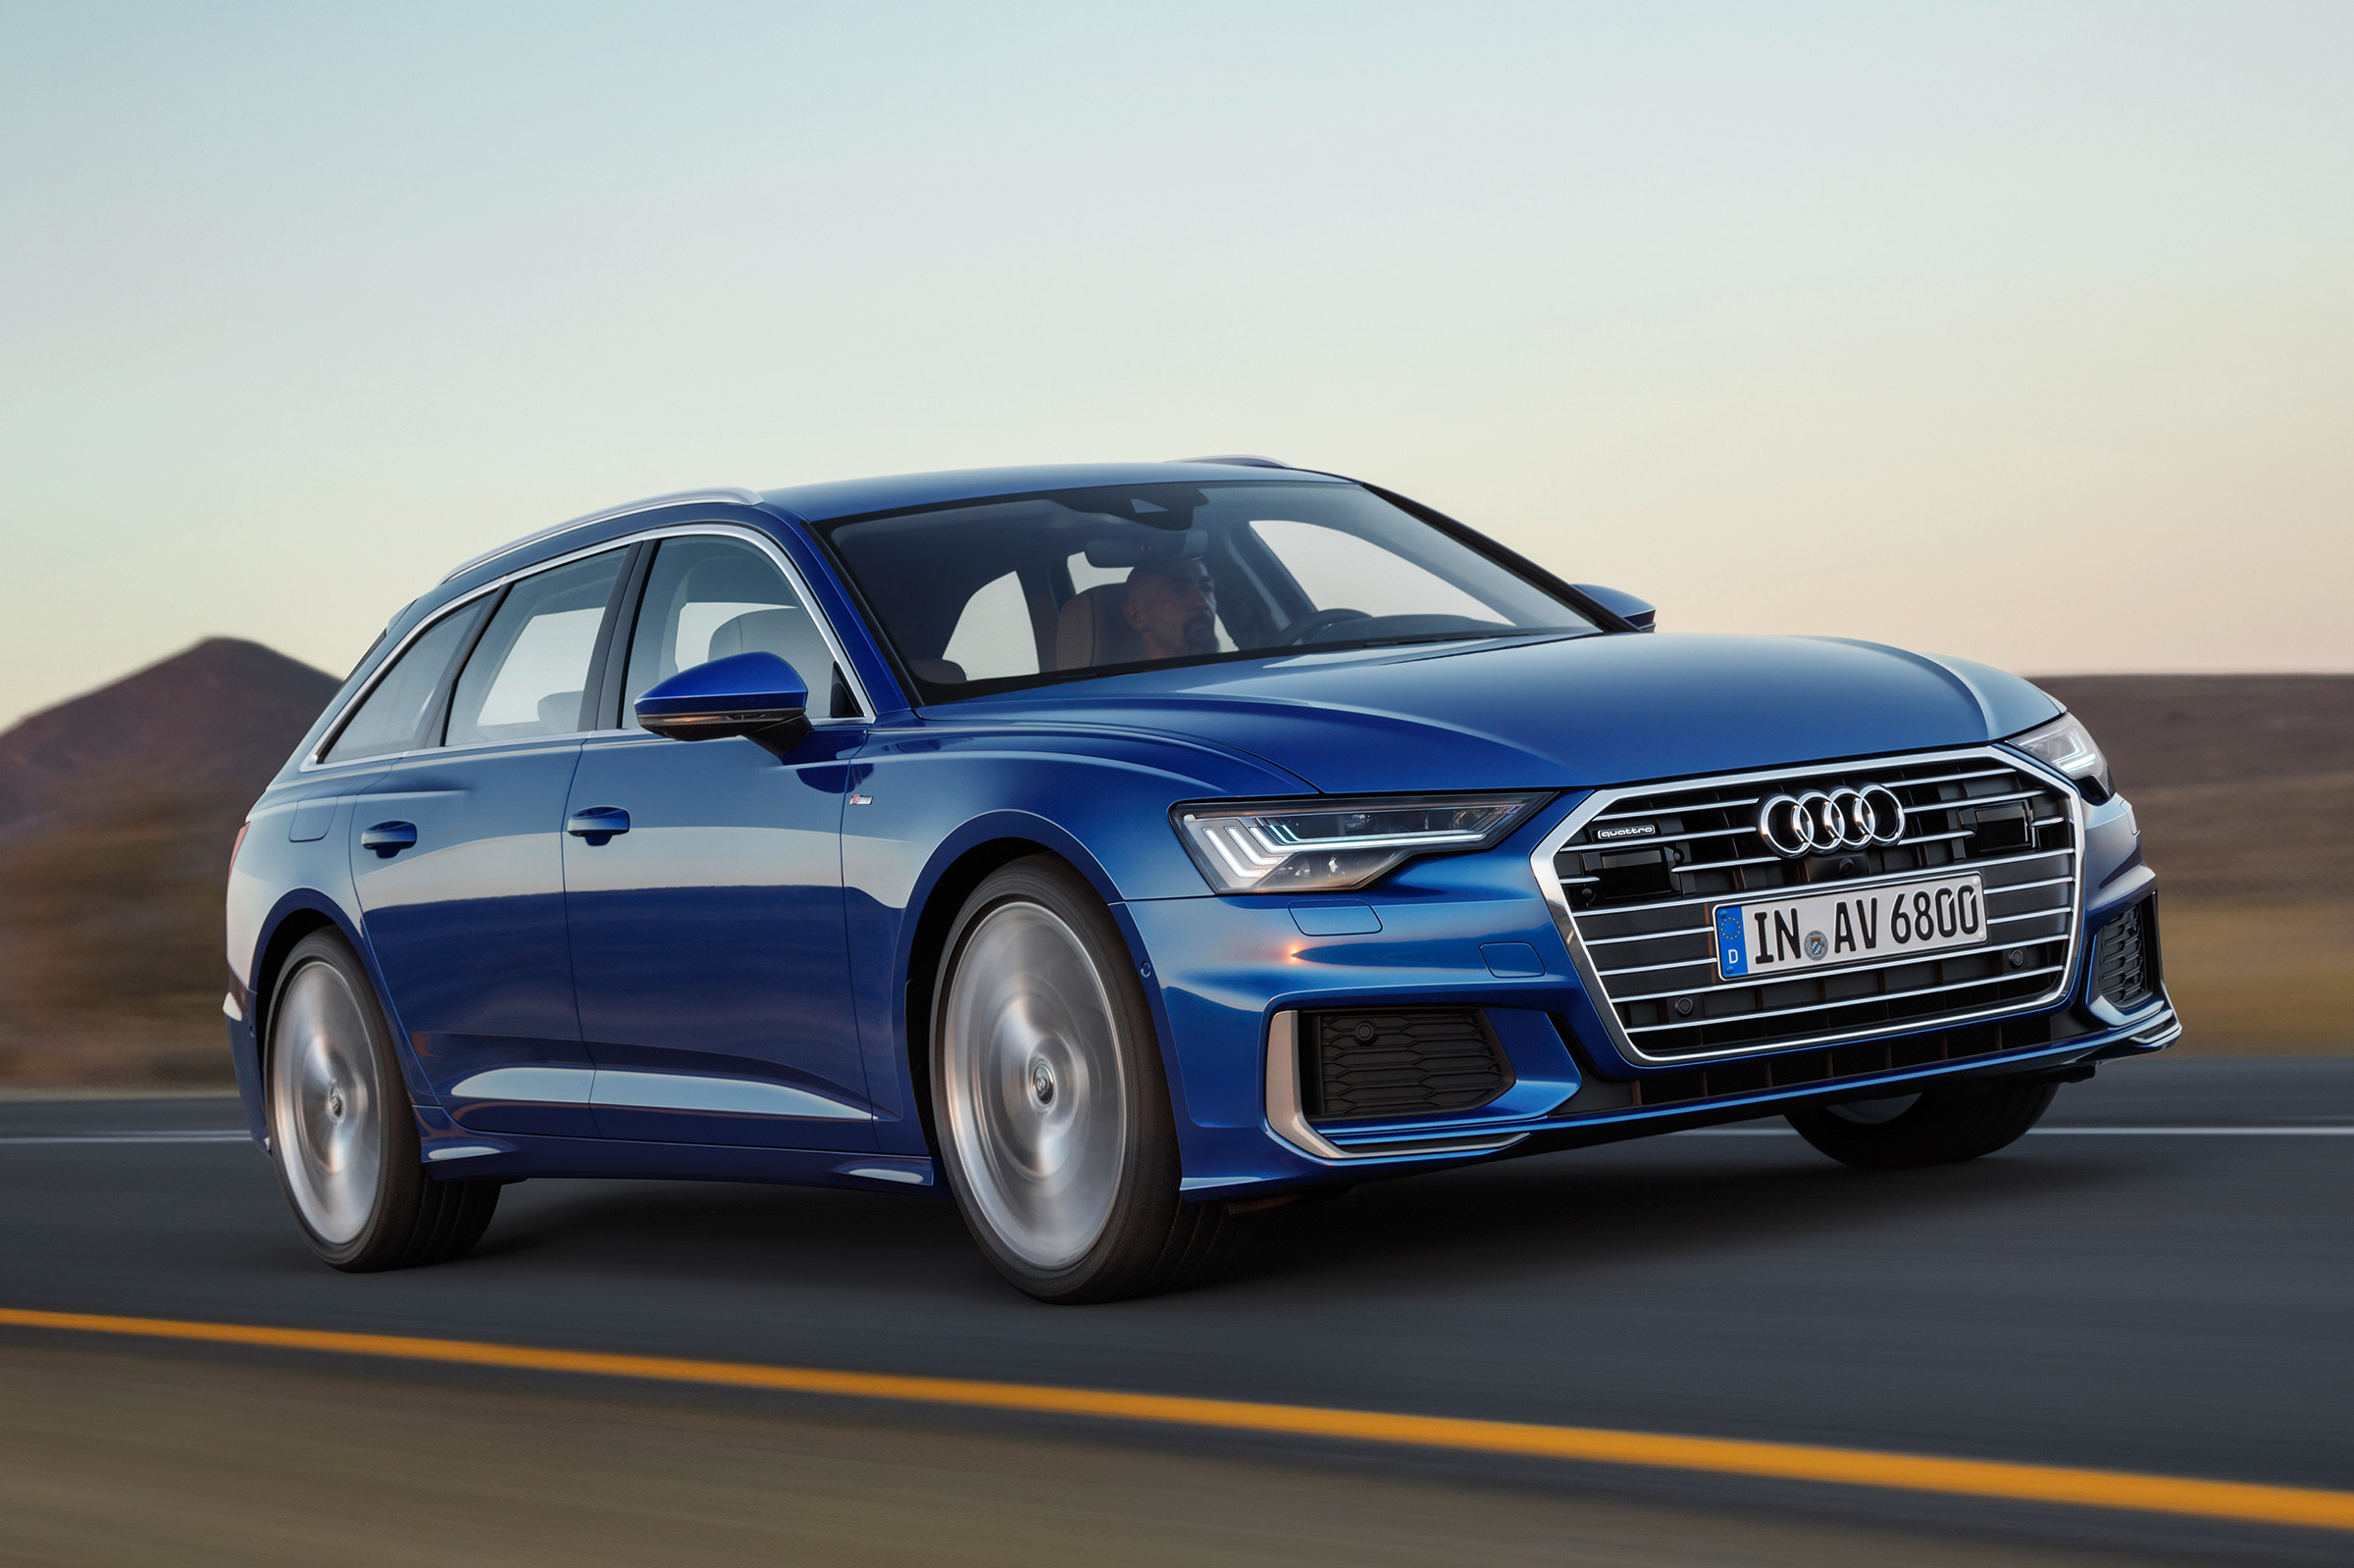 New 2018 Audi A6 Avant estate loads up on style Auto Express